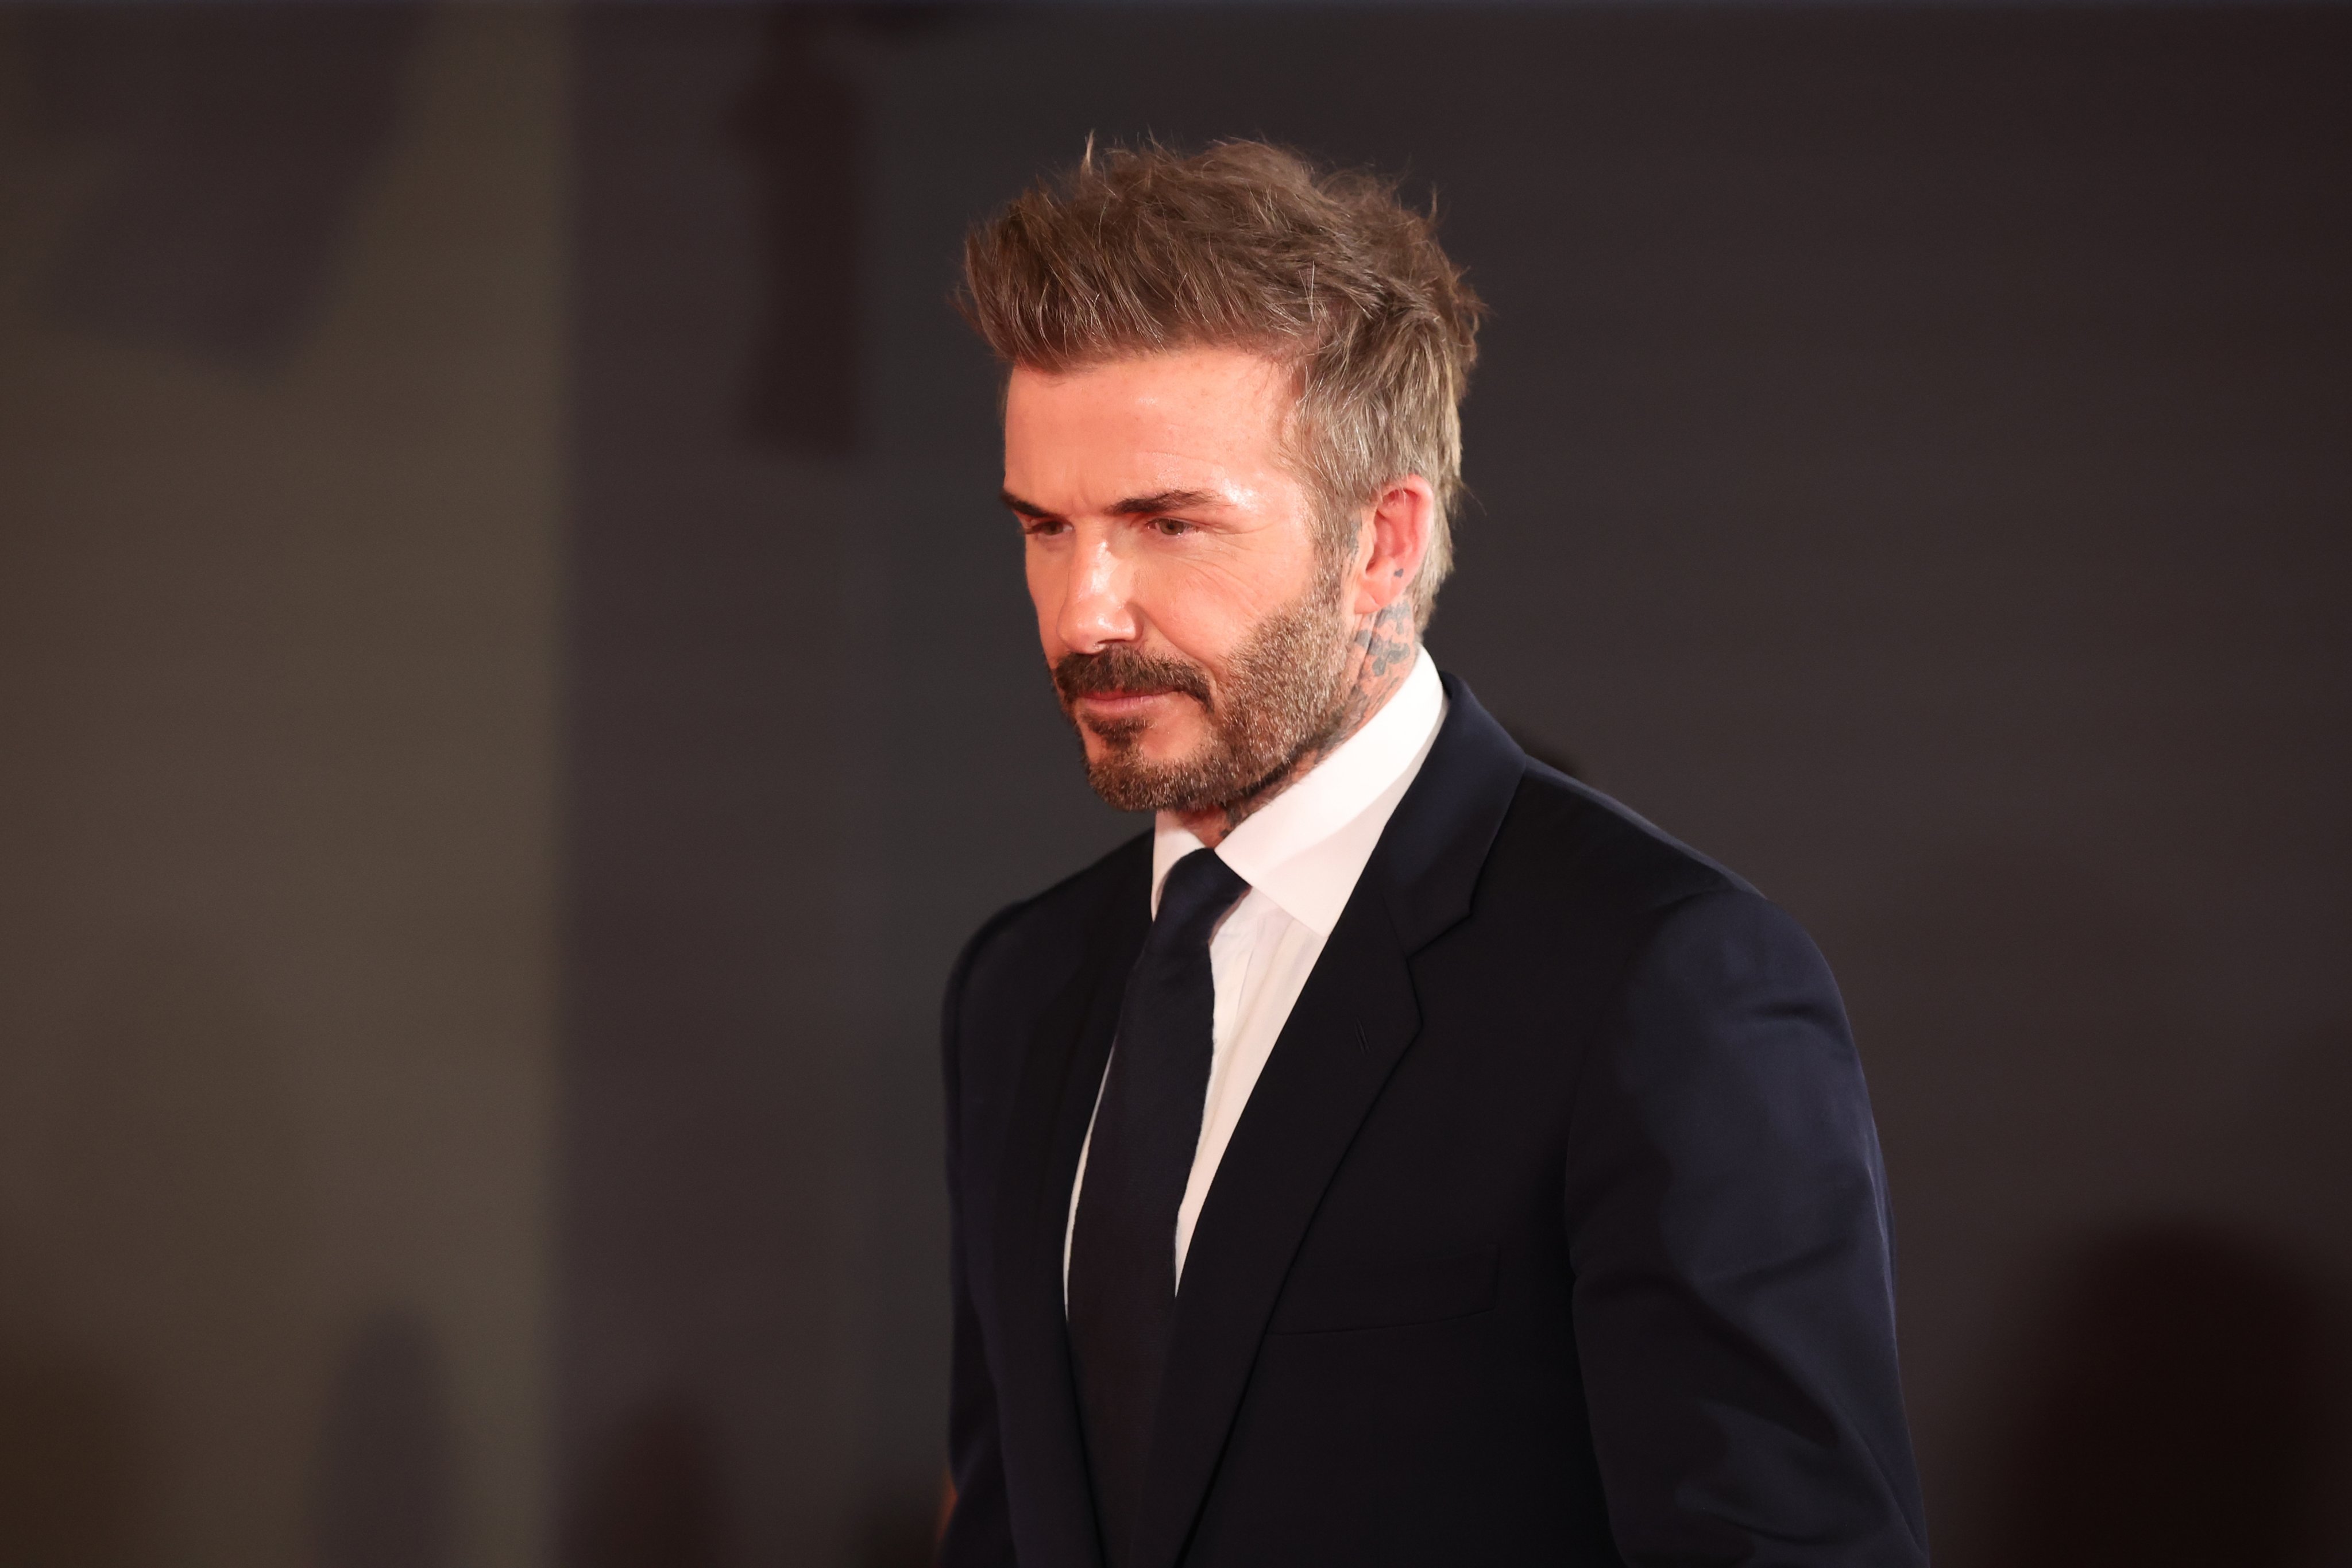 David Beckham has become a global brand ambassador for AliExpress, Alibaba’s international shopping platform. Photo: EPA-EFE